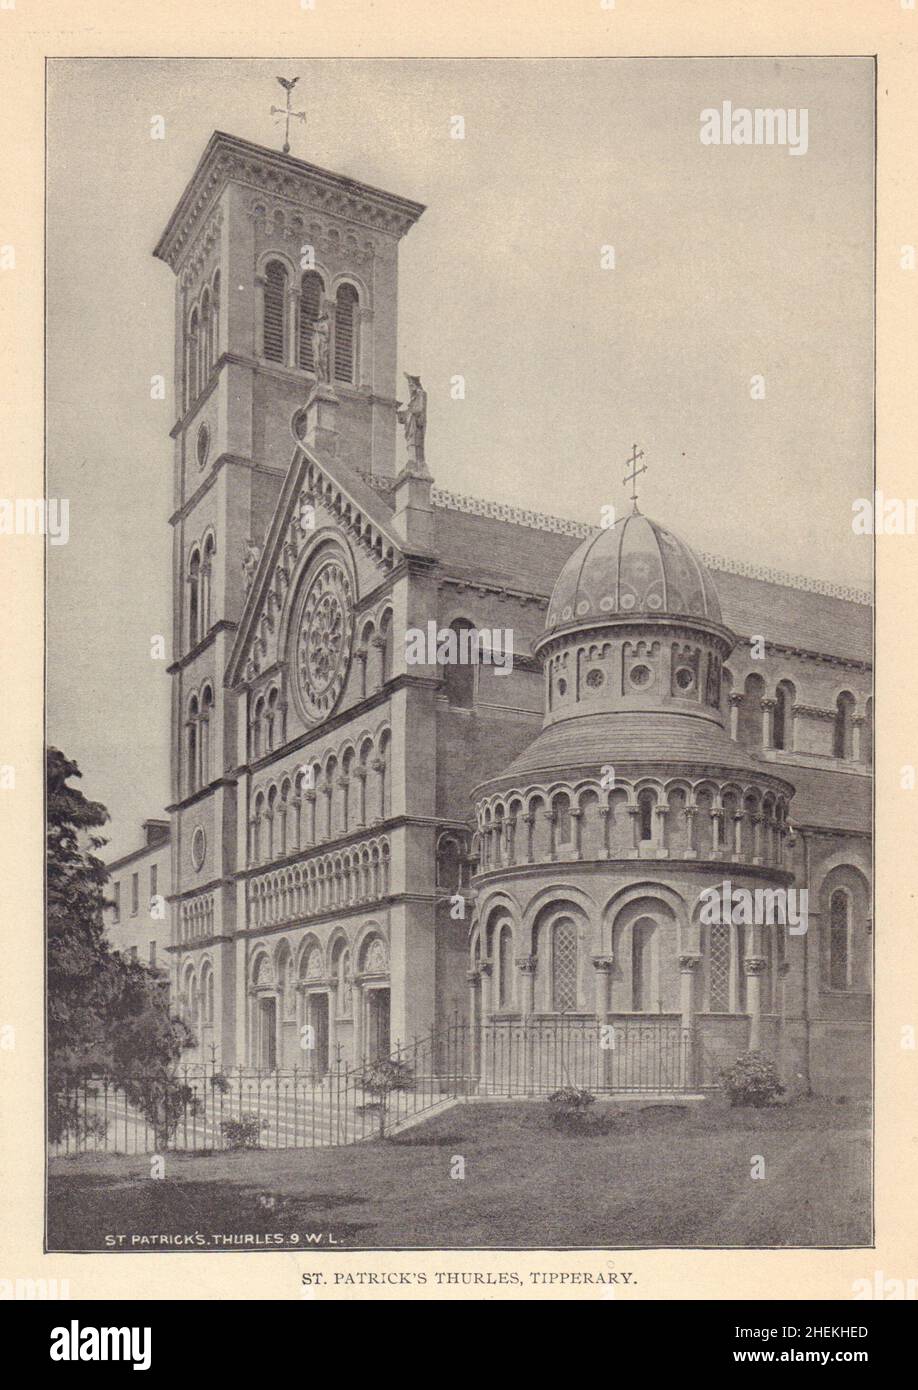 St Patrick's Thurles, Tipperary.Irlande 1905 ancienne image imprimée Banque D'Images